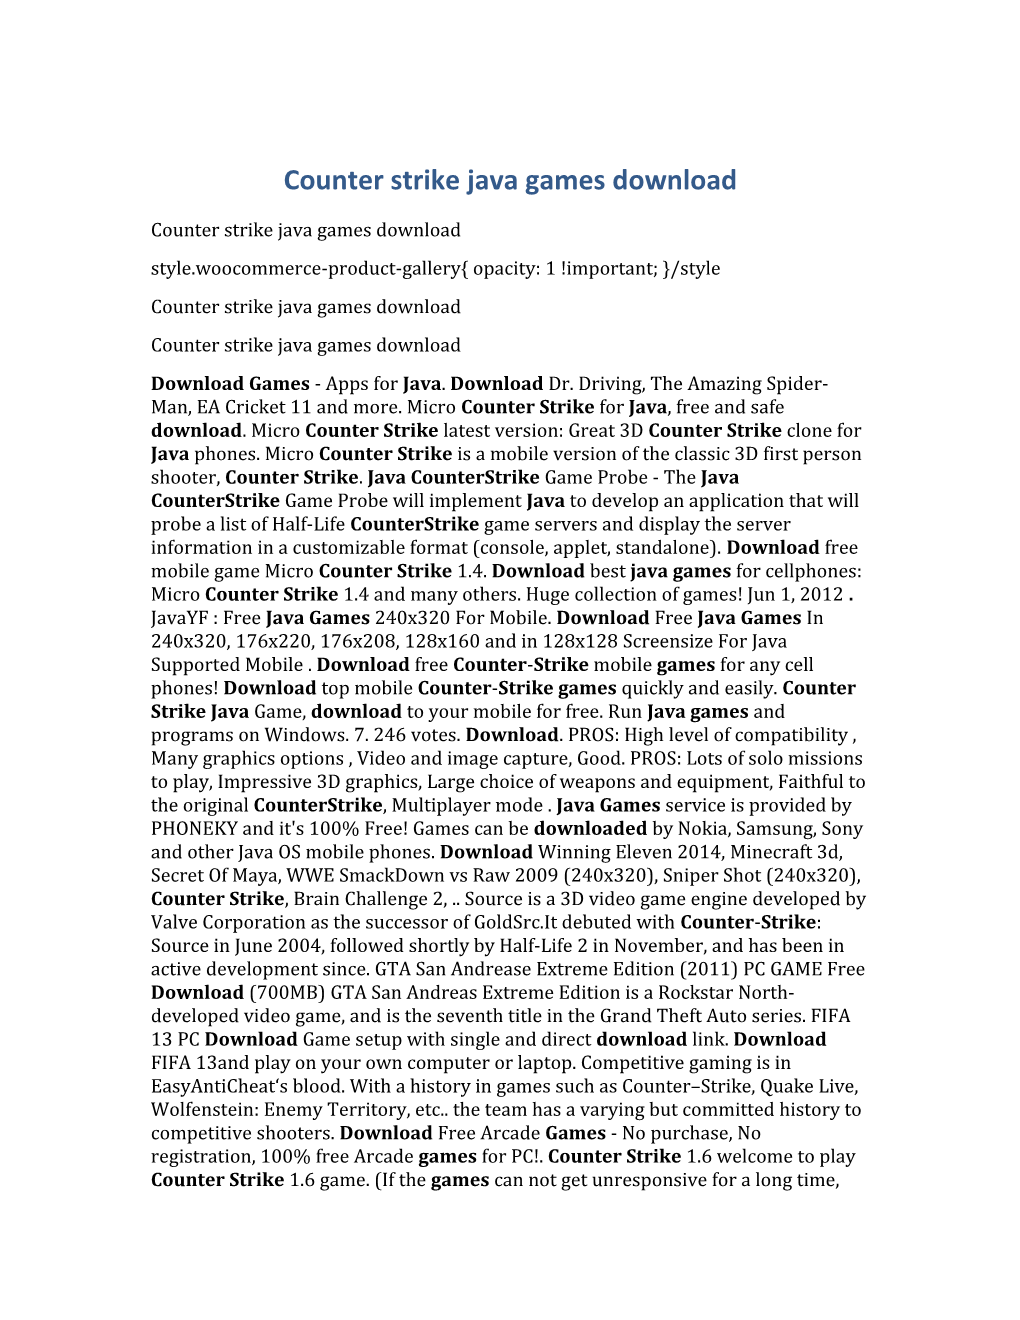 Counter Strike Java Games Download